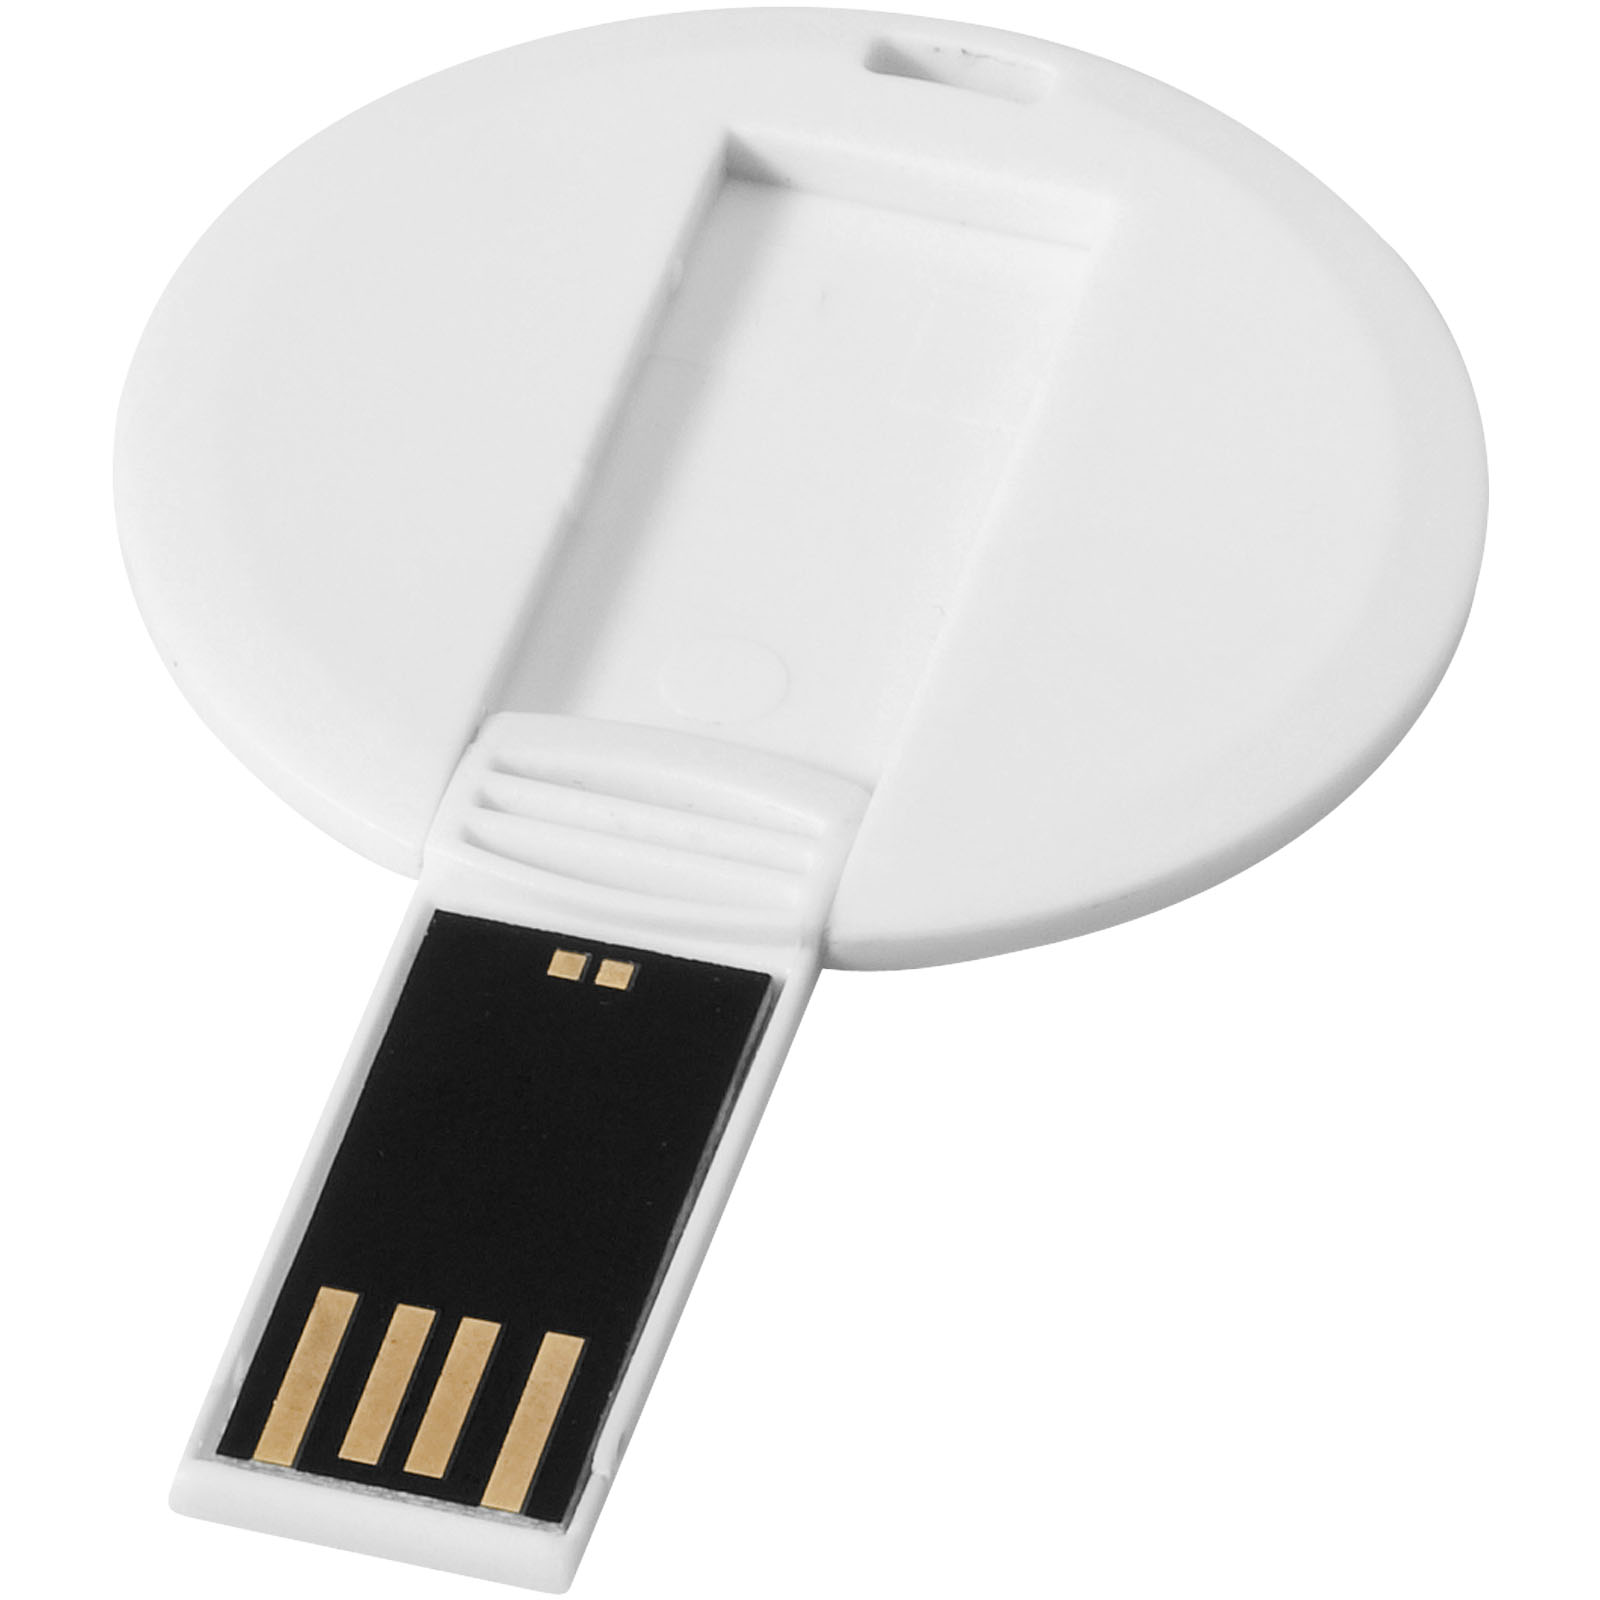 RoundCard USB - Holzhausen